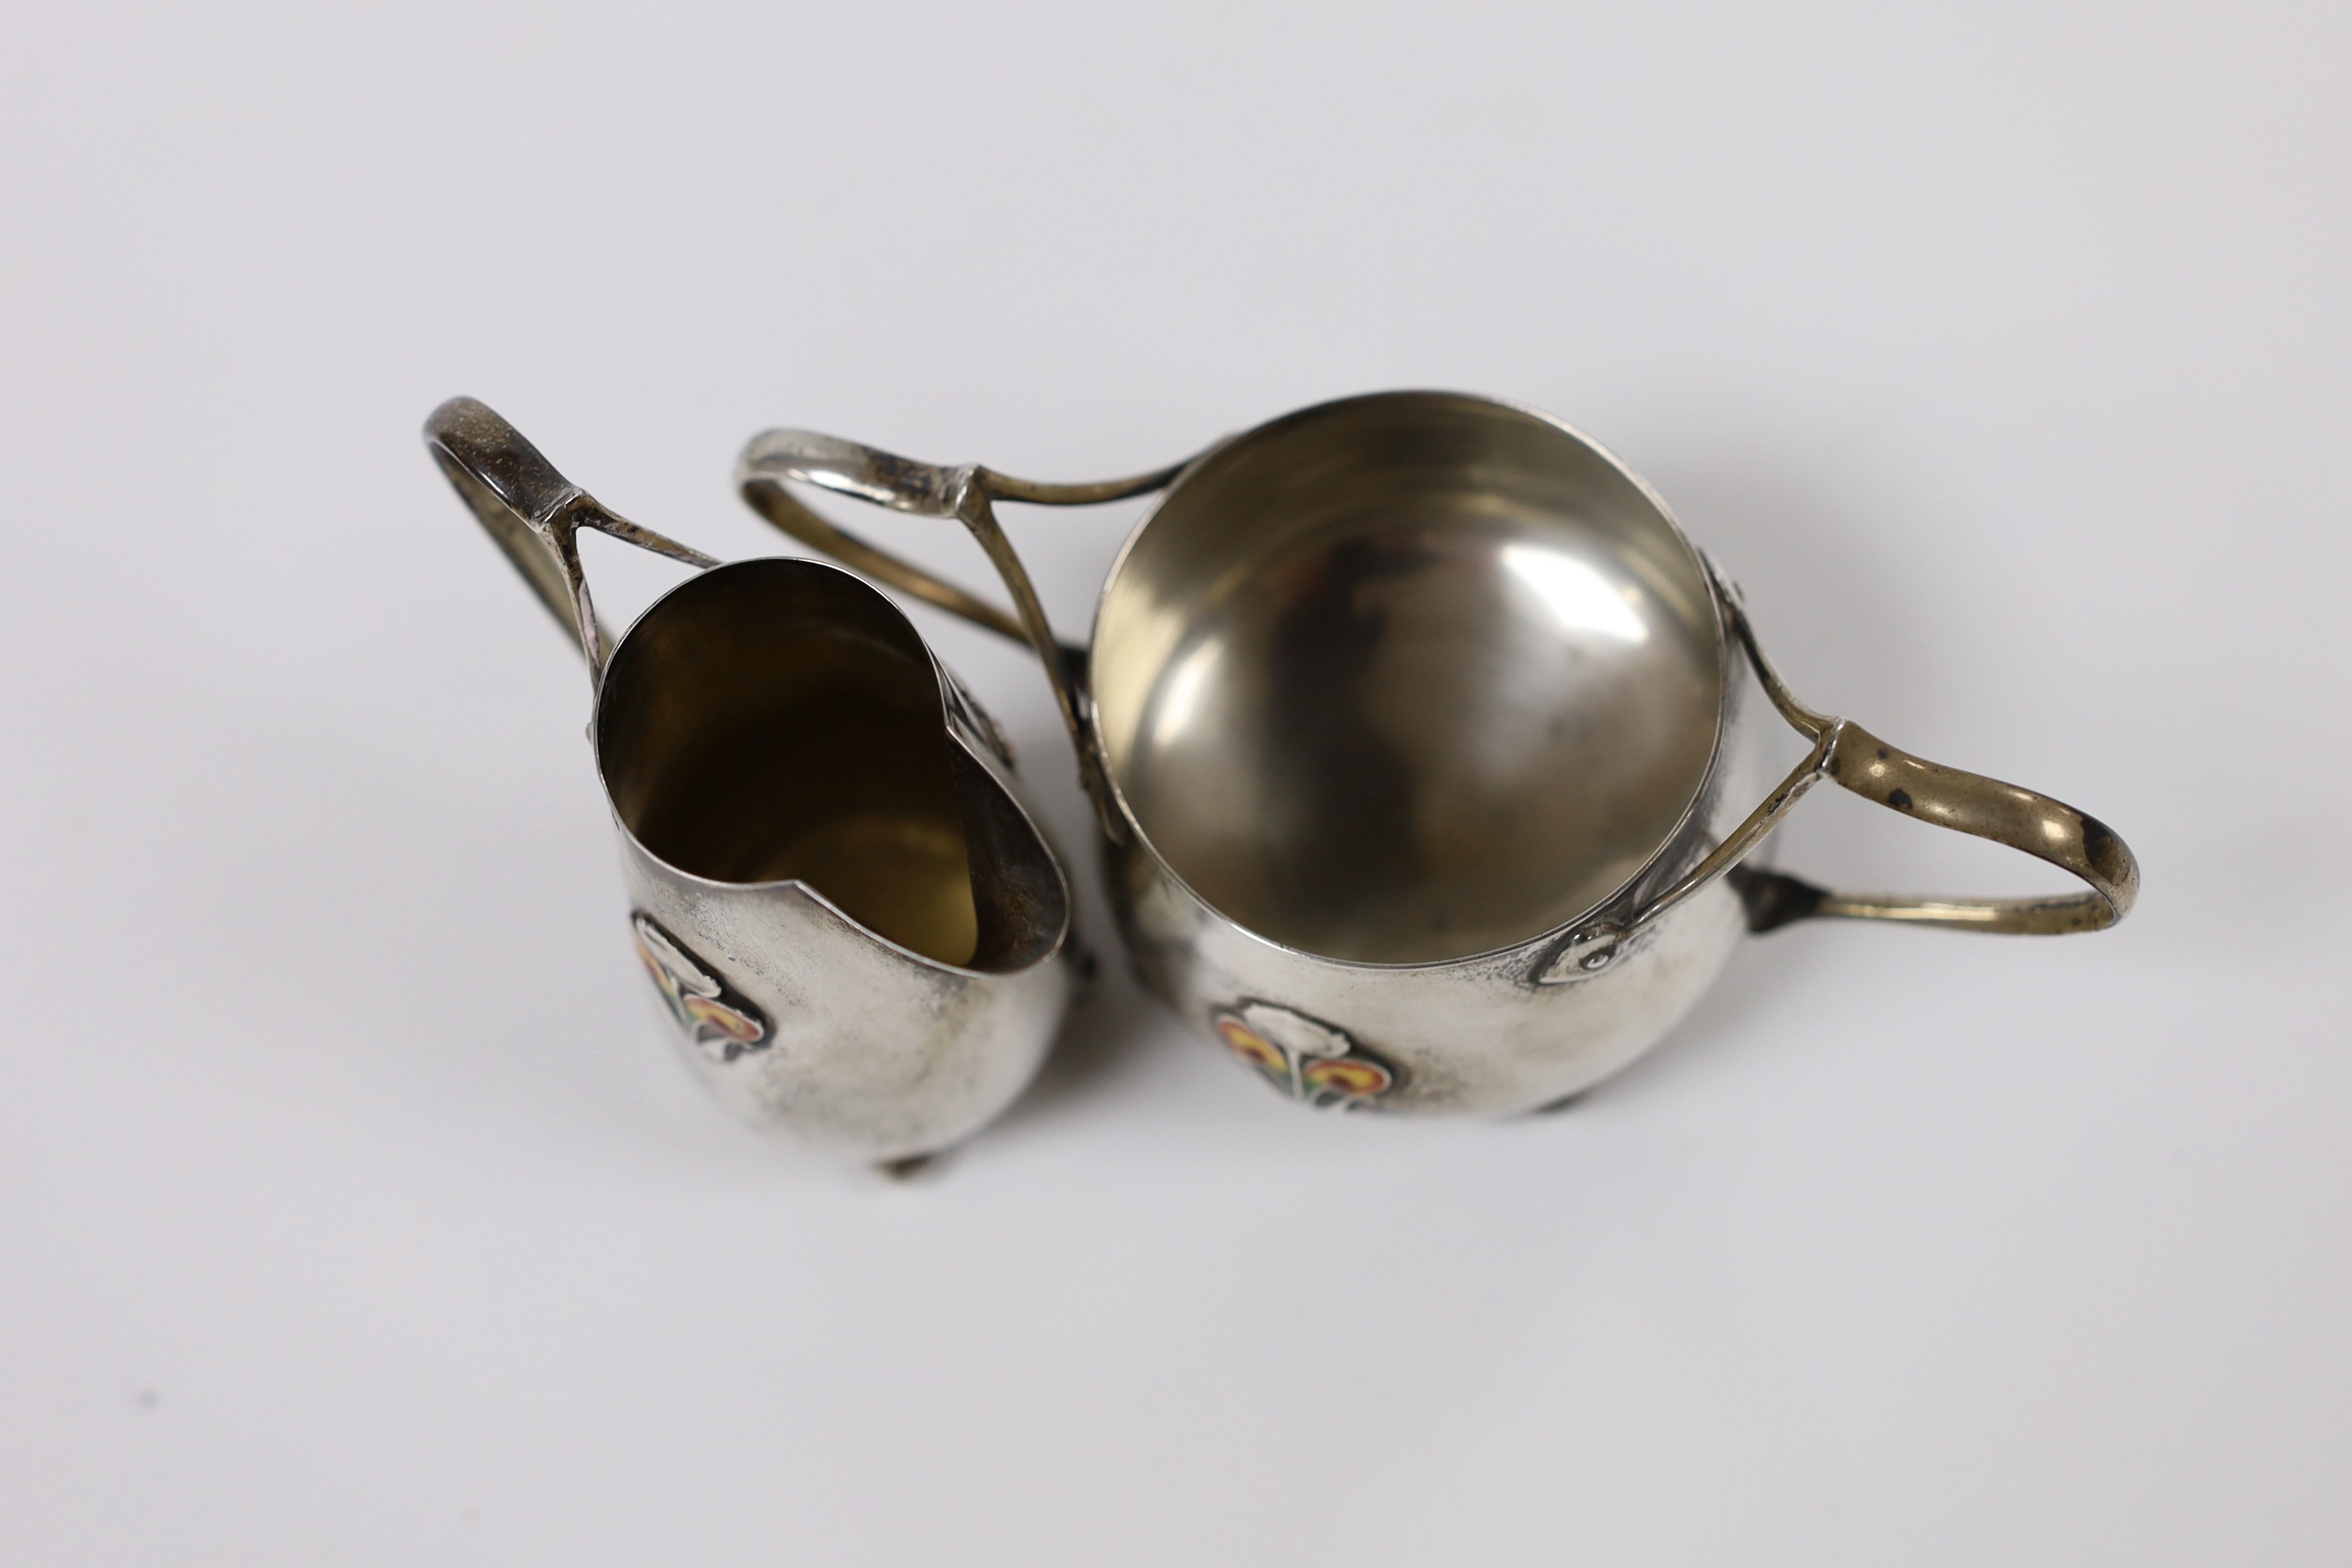 An Edwardian Art Nouveau silver and enamelled cream jug and sugar bowl, C & Co, Birmingham, 1905, jug height 76mm, gross weight 123 grams.